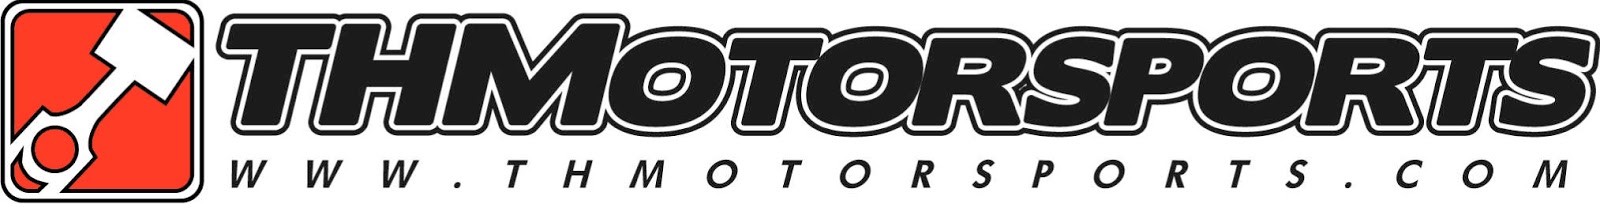 thmotorsports-logo.jpg